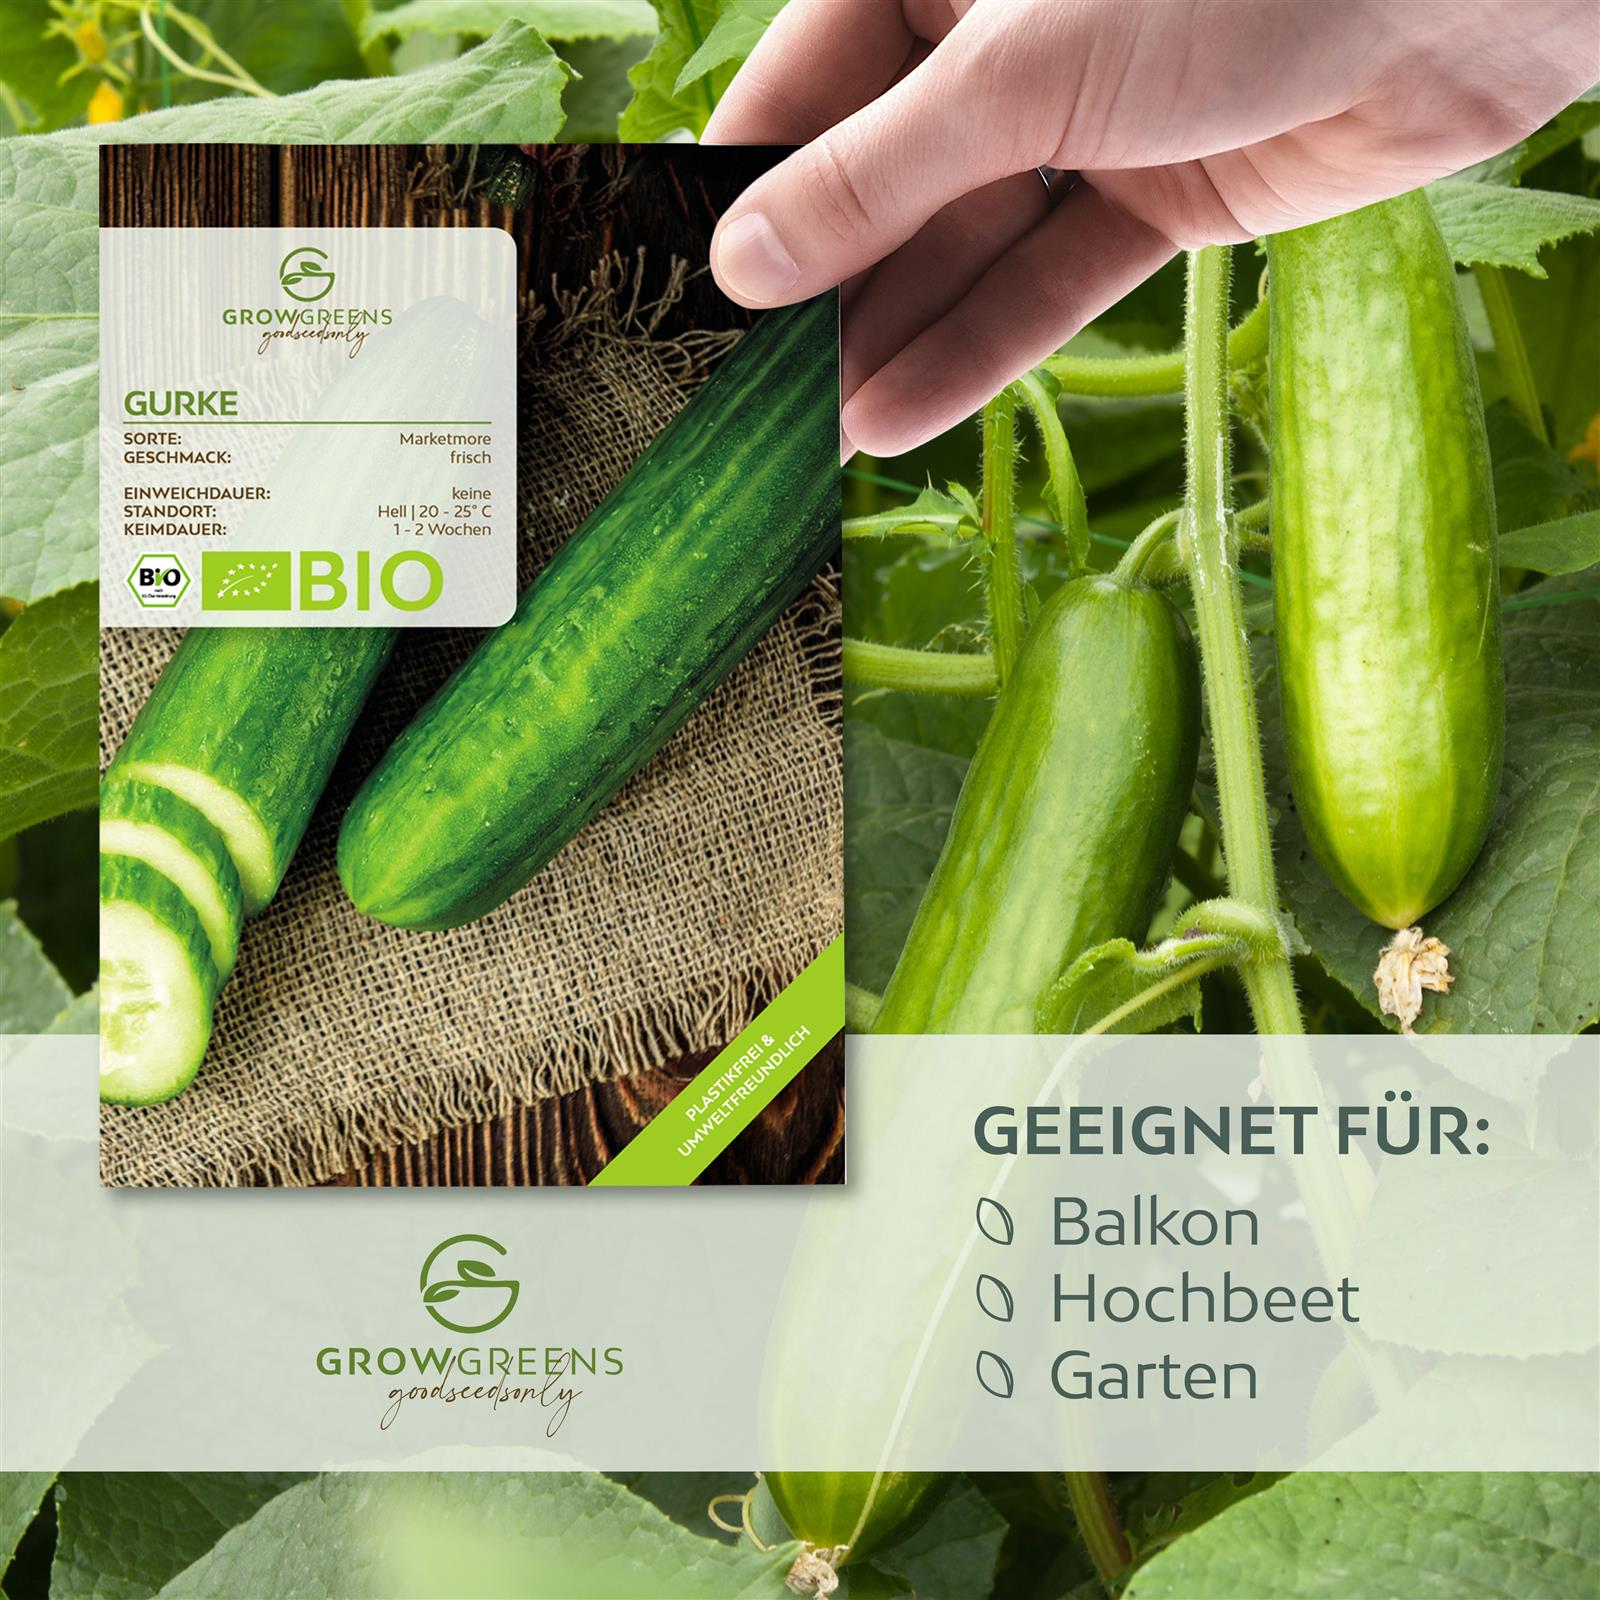 BIO Gurken Samen (Marketmore) - Salatgurke Saatgut aus biologischem Anbau (10 Korn)